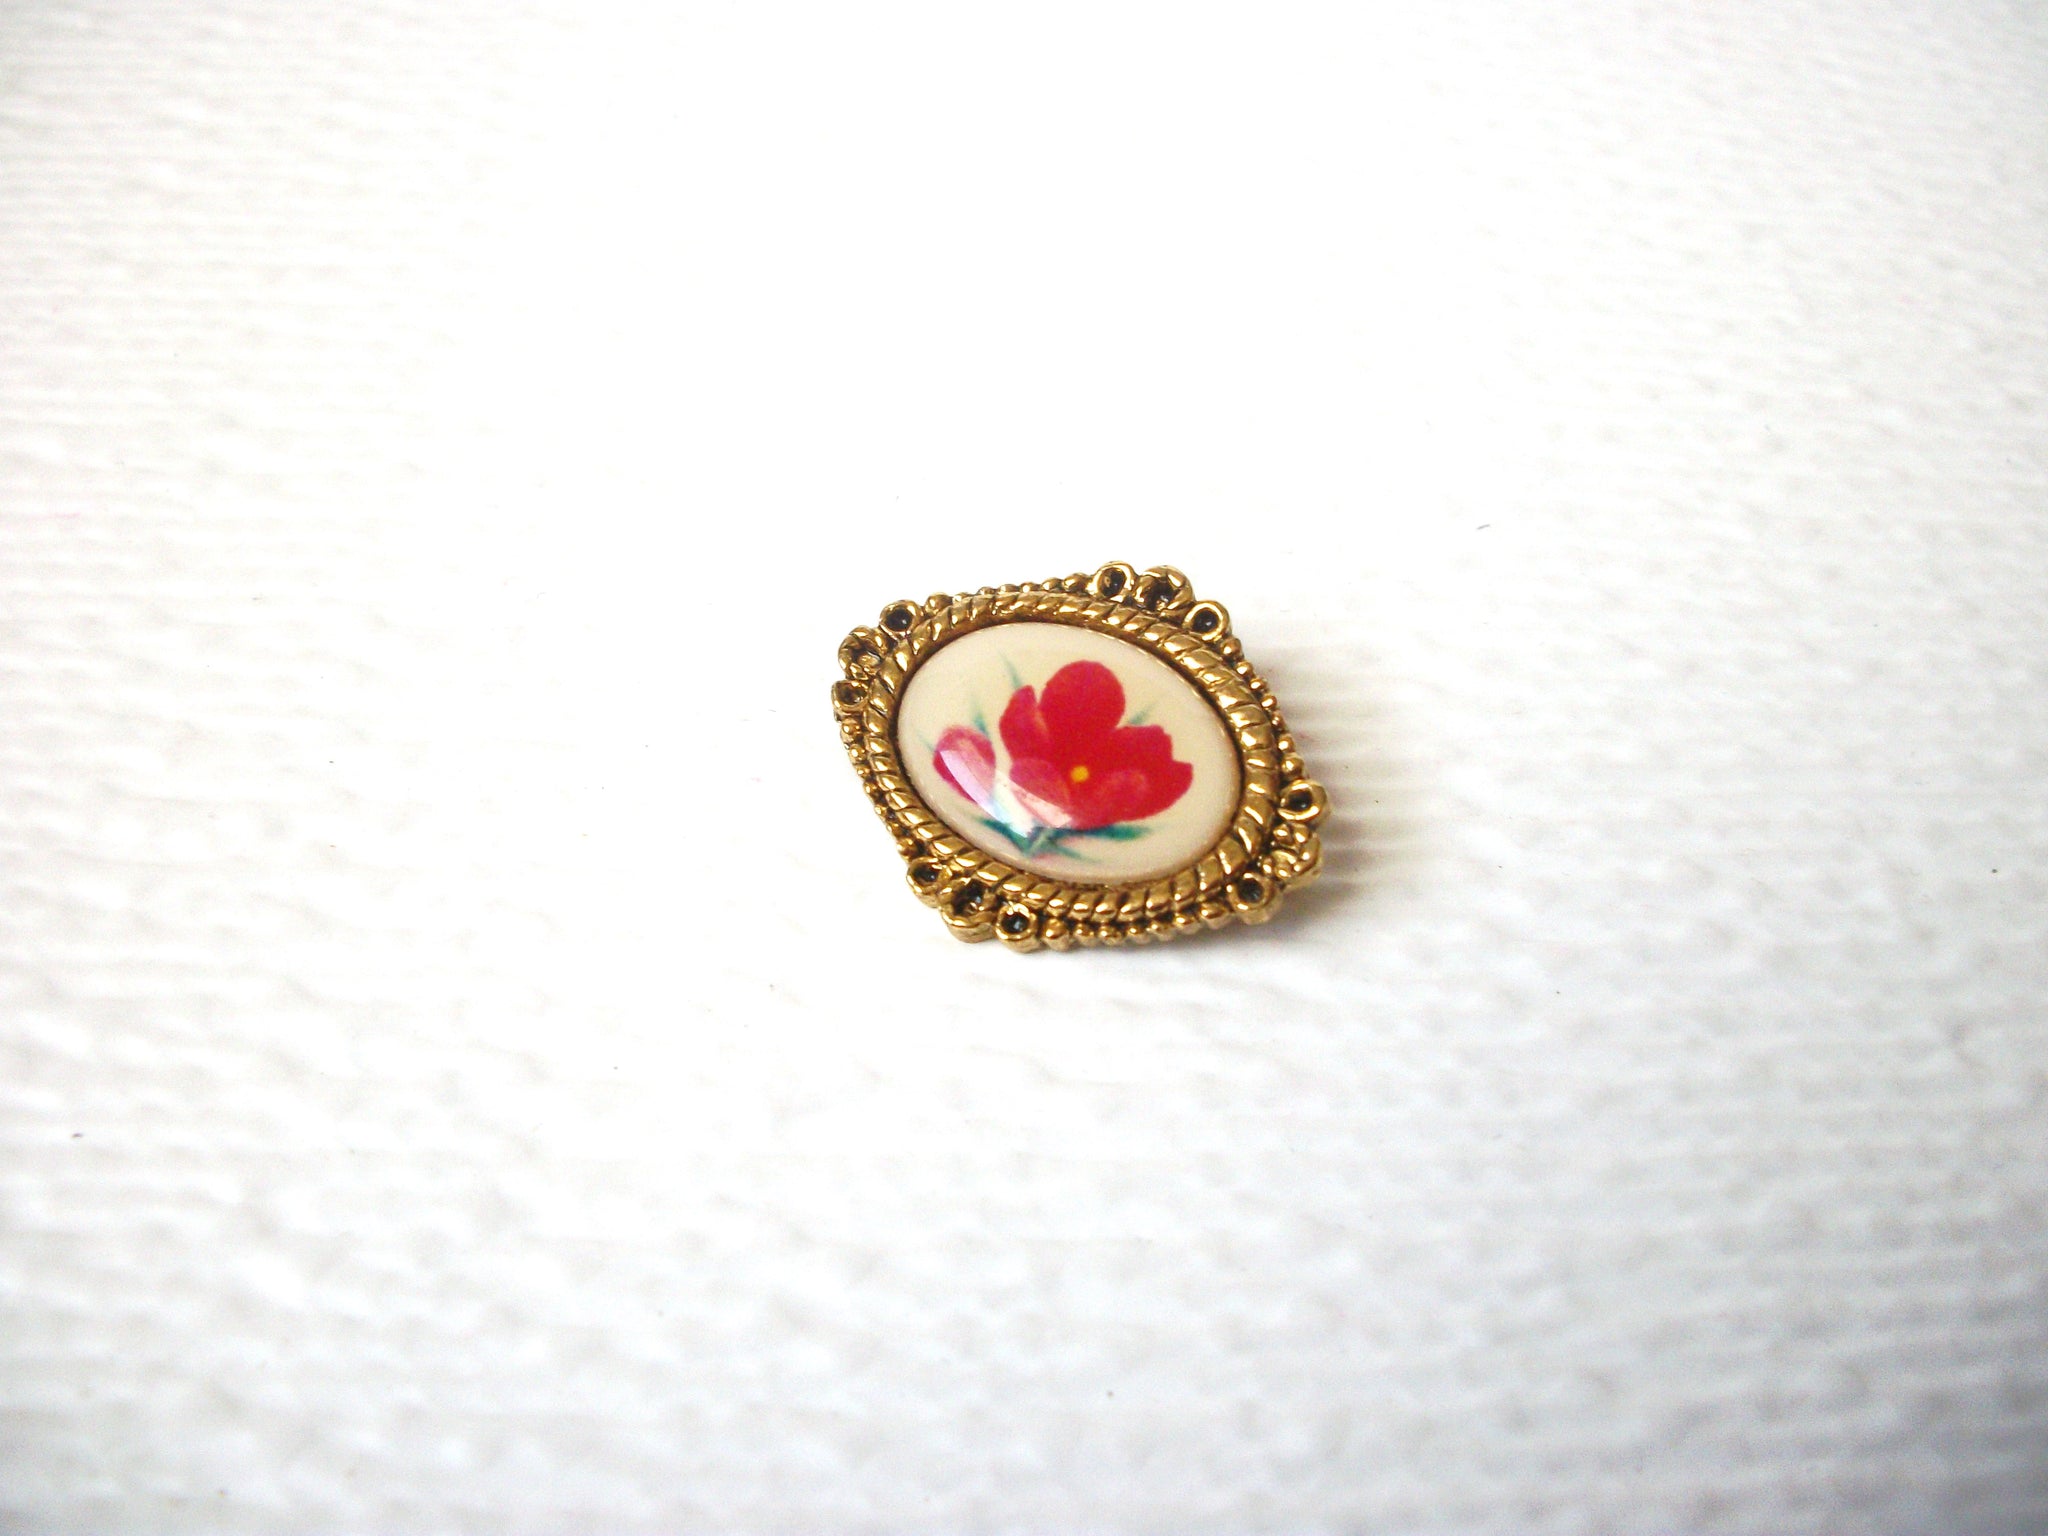 Vintage Smaller CAMCO Gods Love Floral Brooch Pin 112920